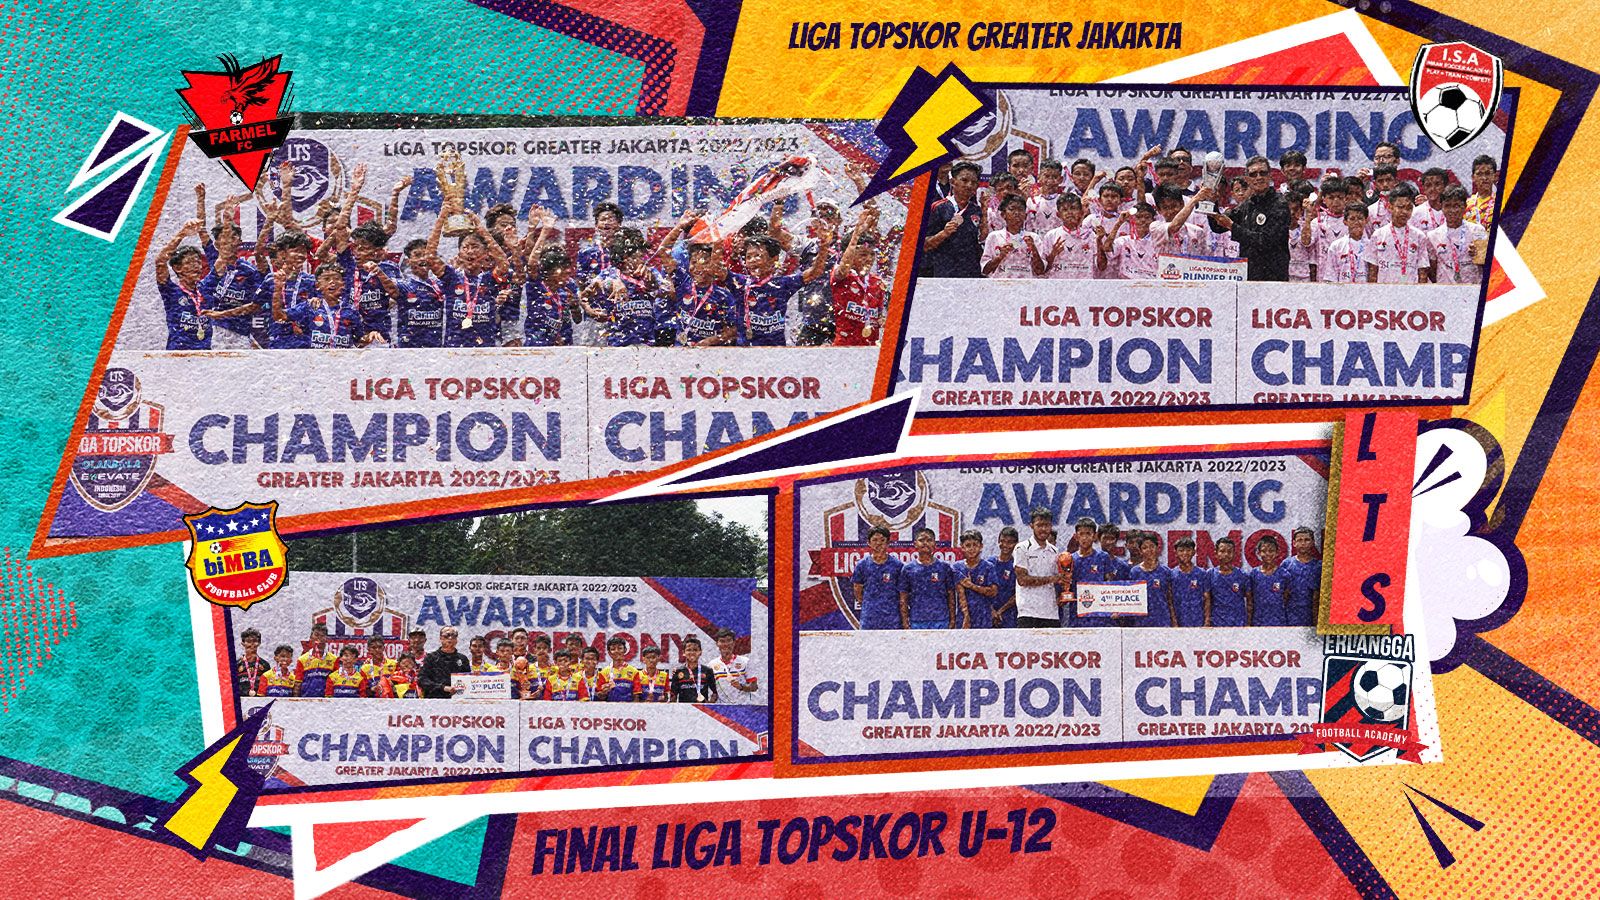 Farmel FC Juara Liga TopSkor U-12 2022-2023